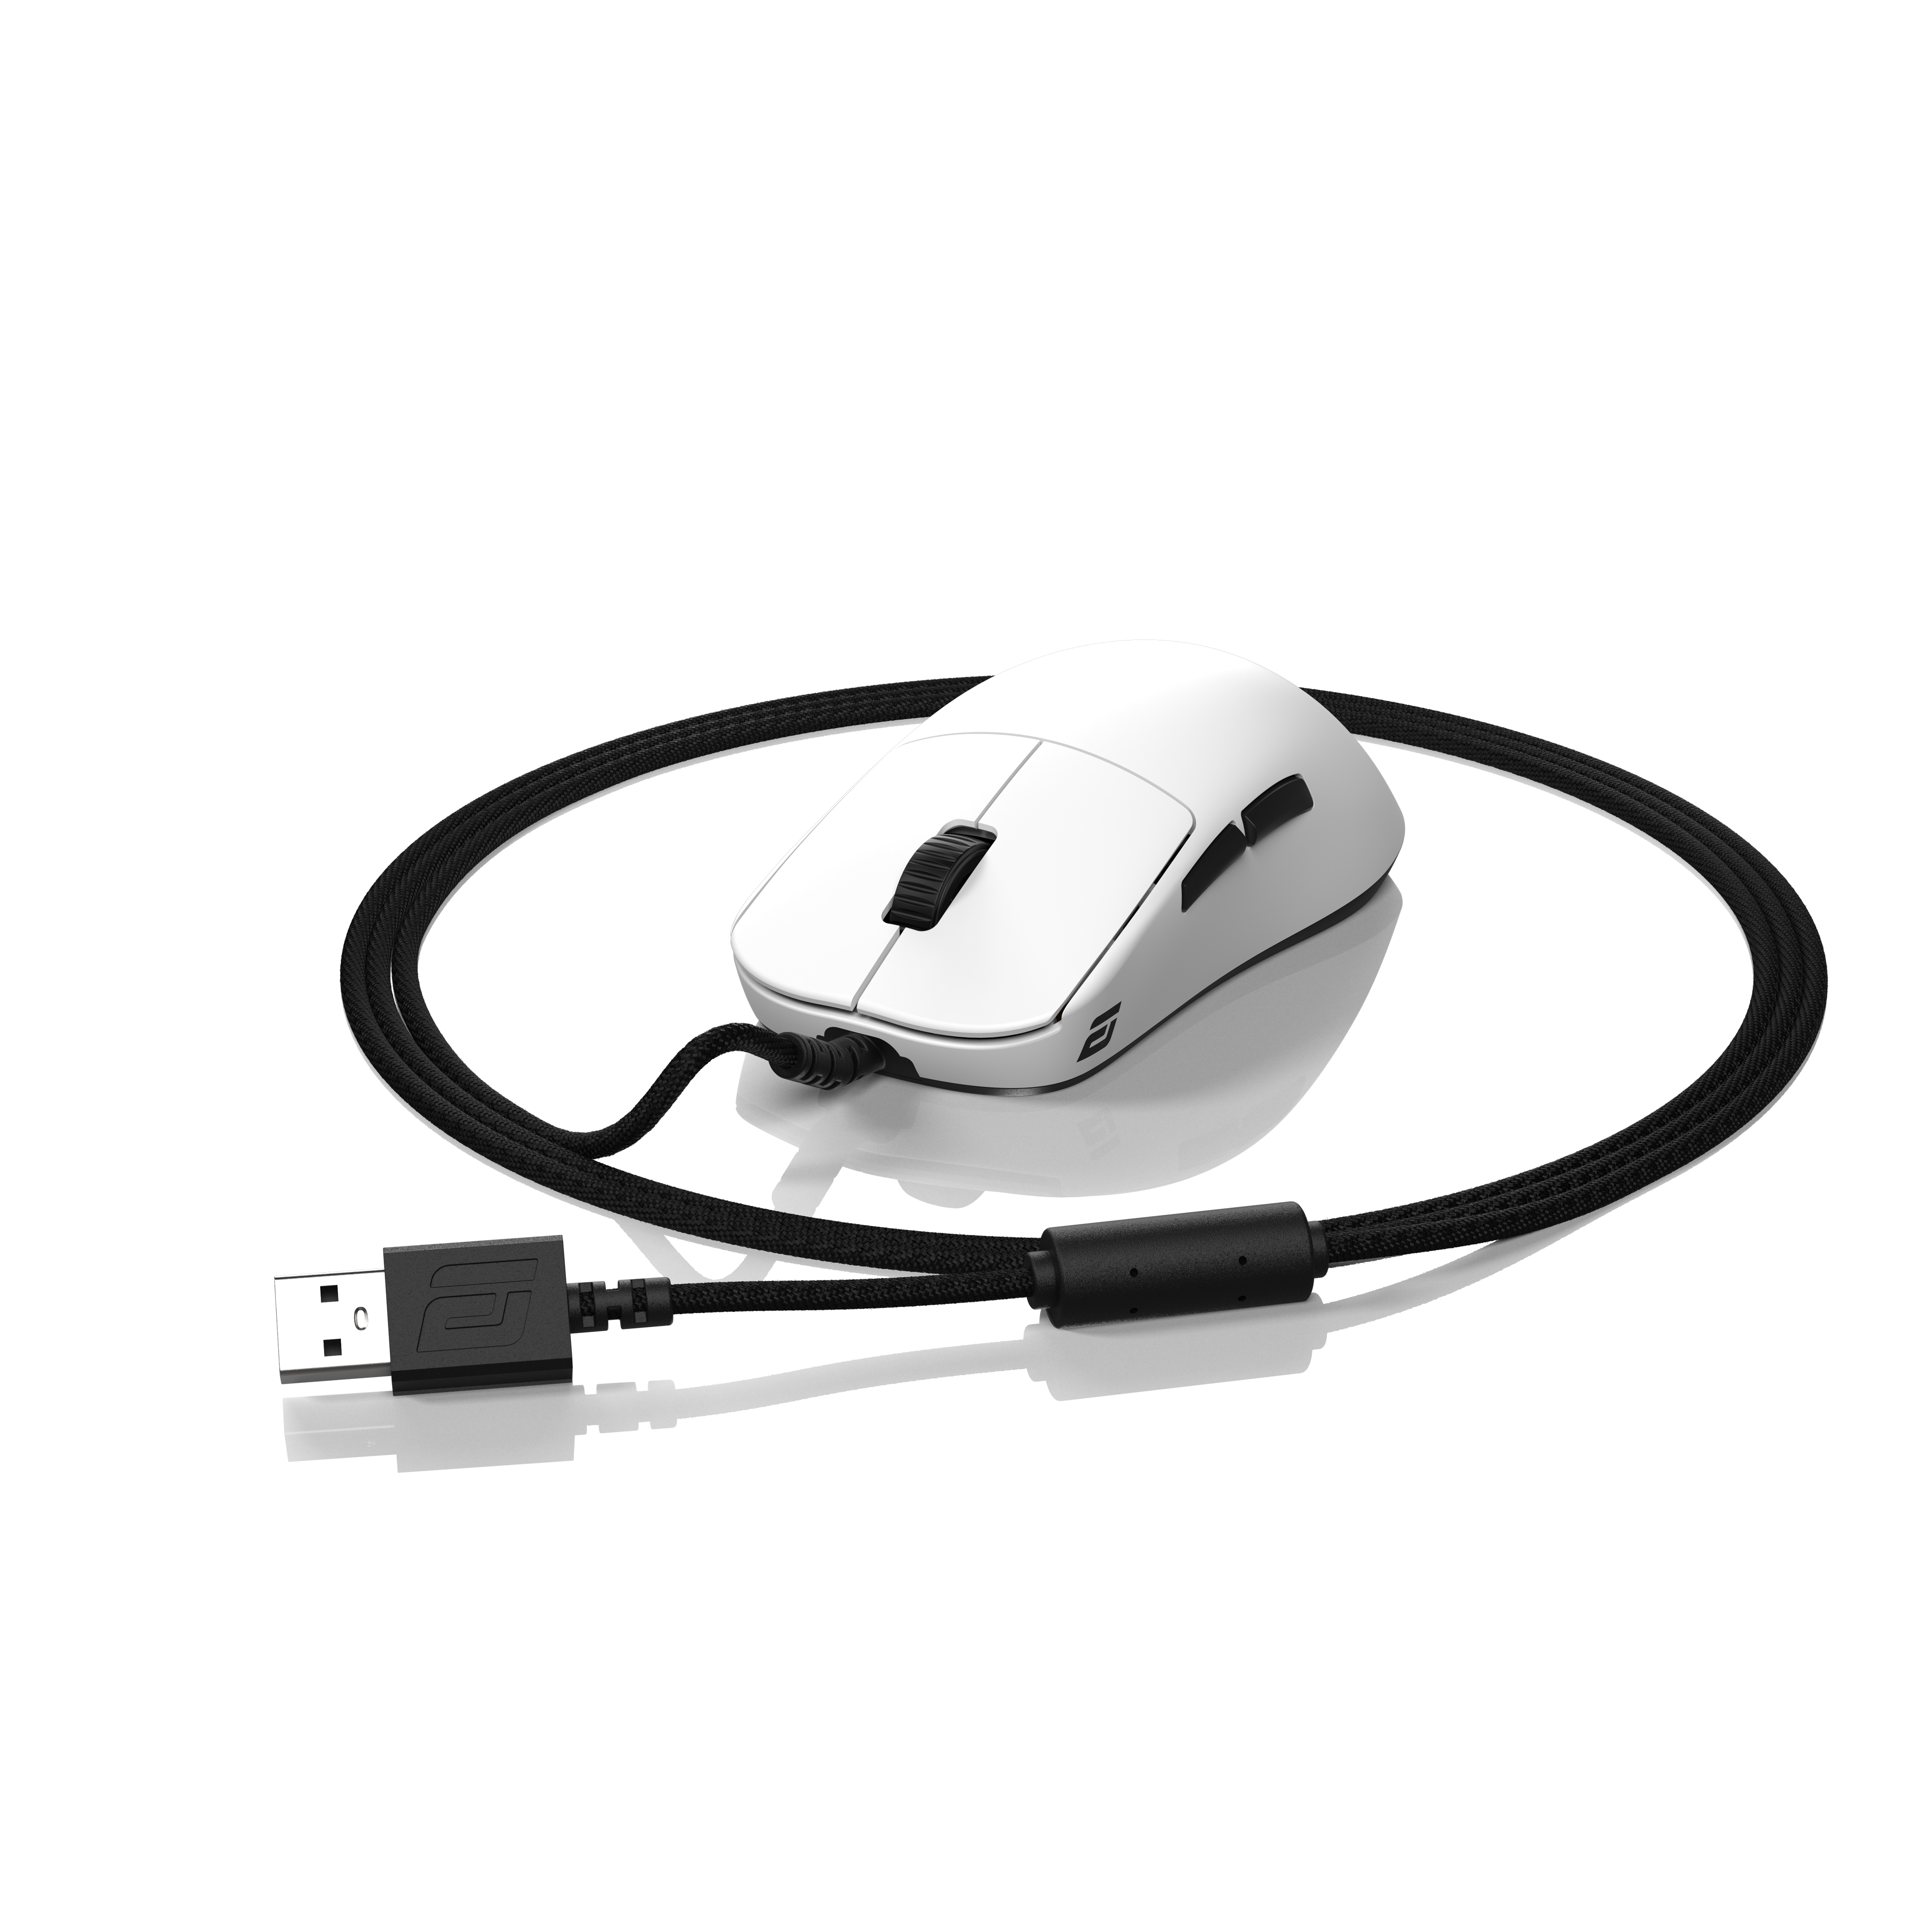 Endgame Gear - Endgame Gear OP1 USB Optical Gaming Mouse - White